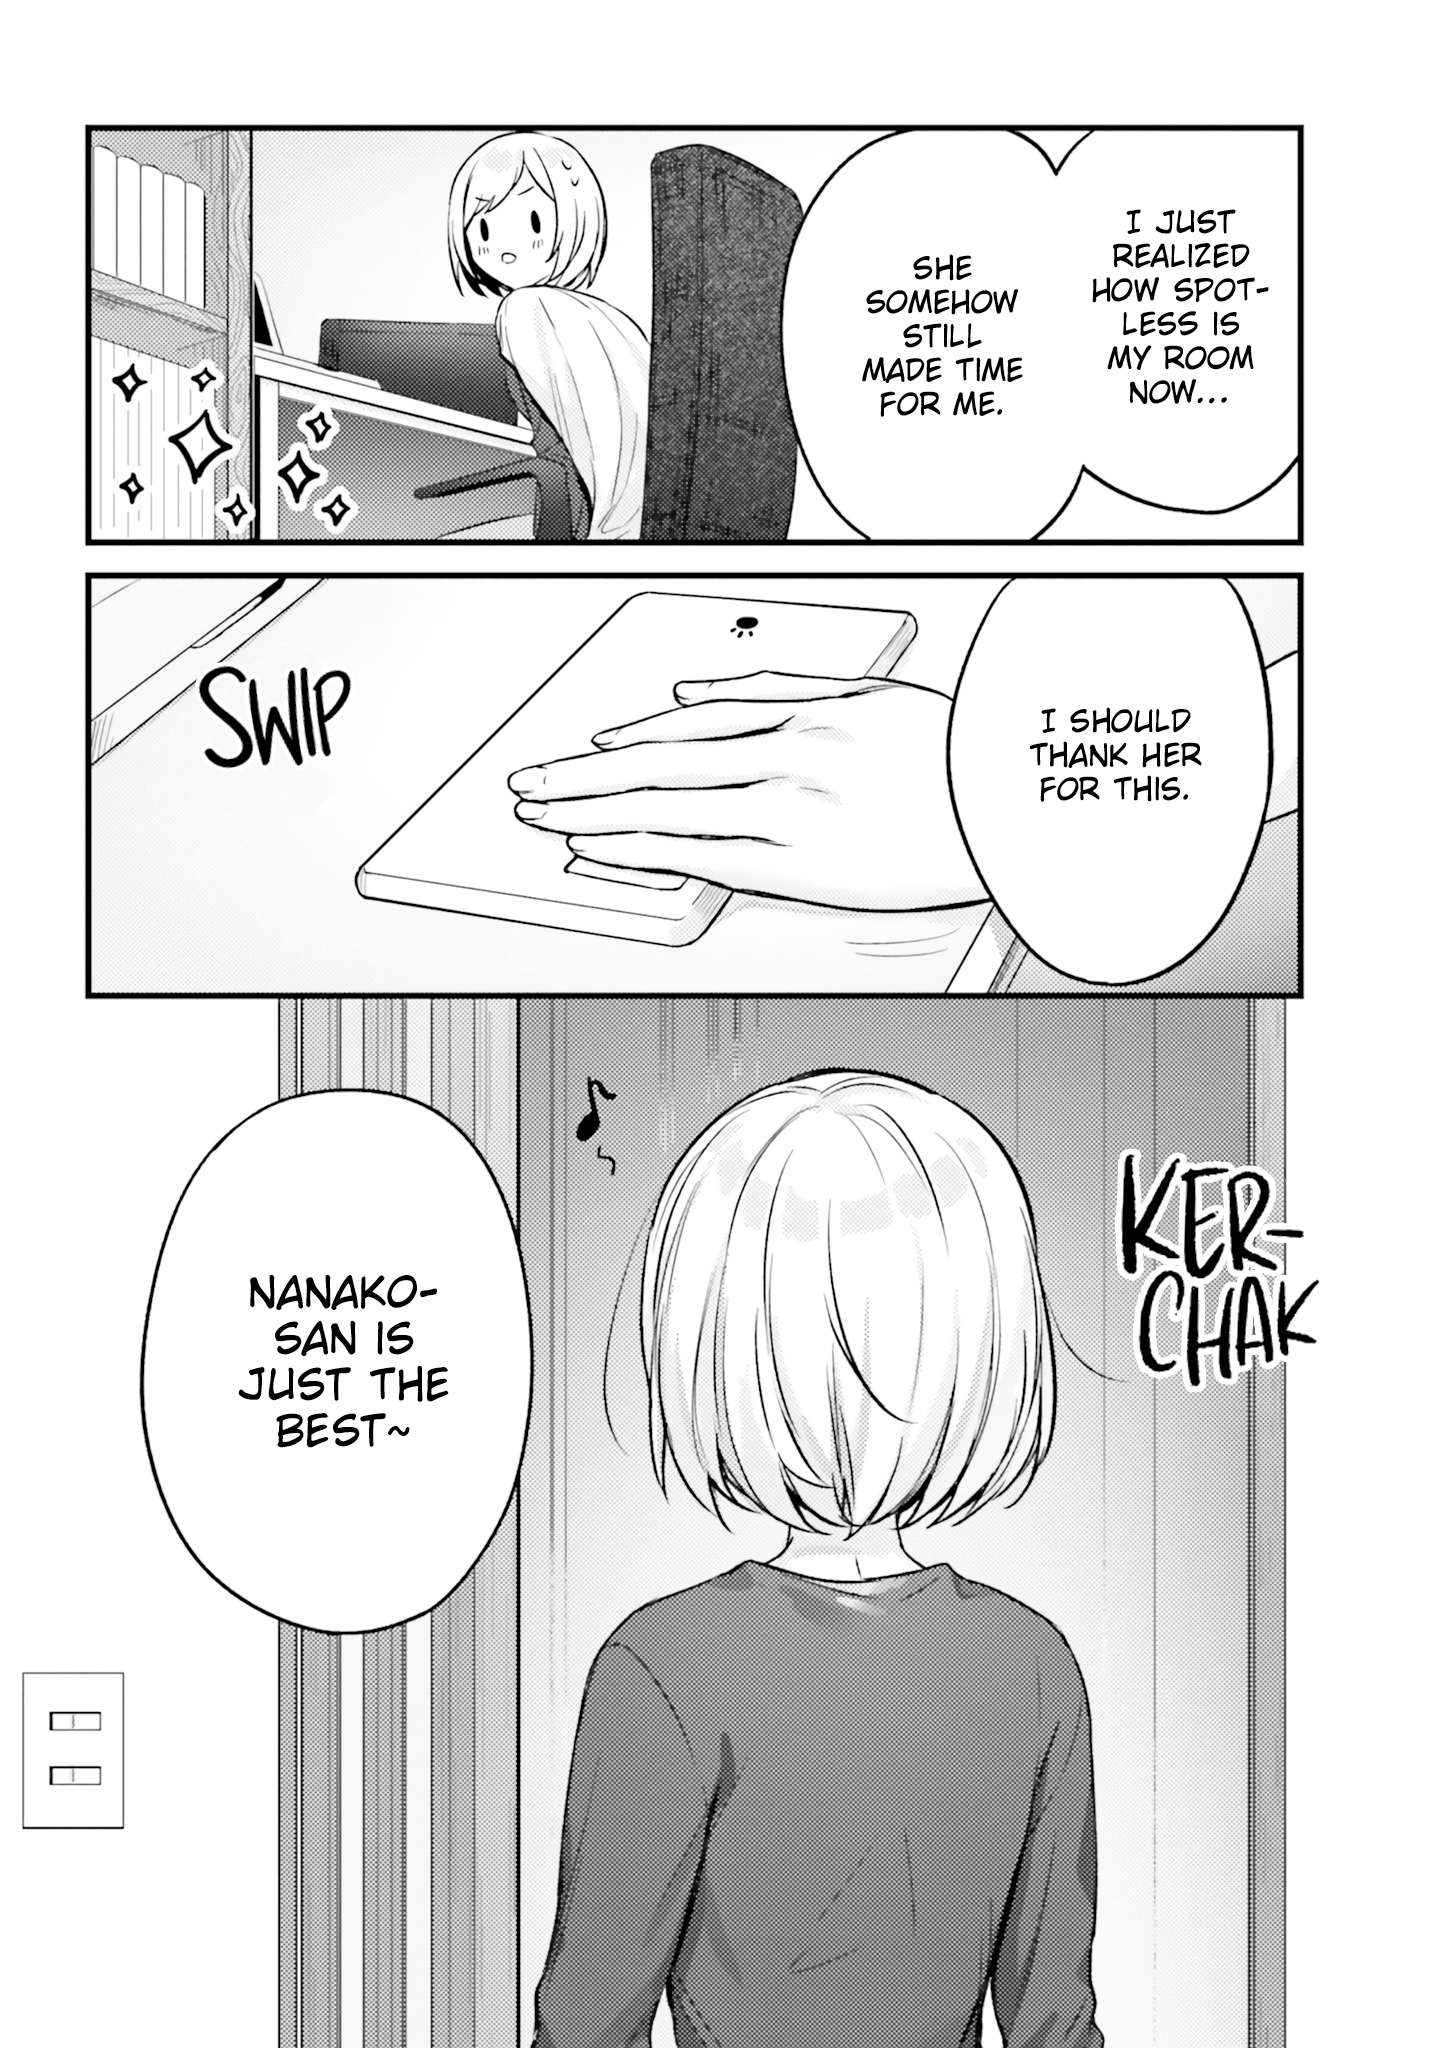 Read Kinjo no Nanako-san Manga English [New Chapters] Online Free -  MangaClash